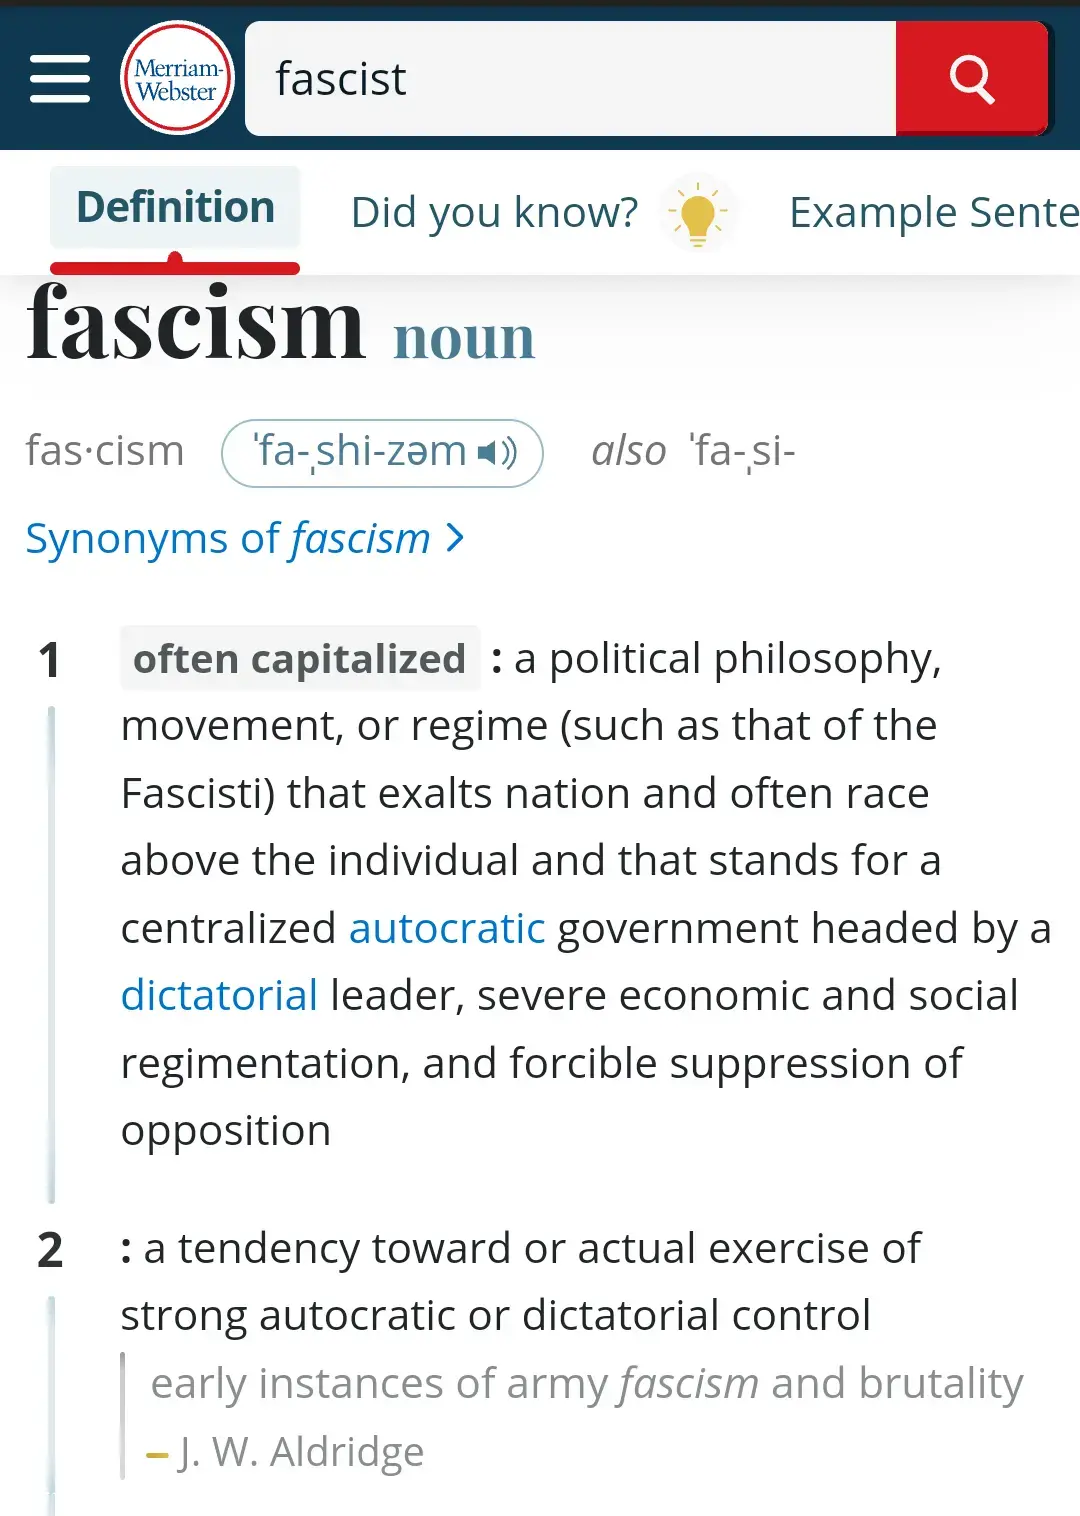 Definition of fascism